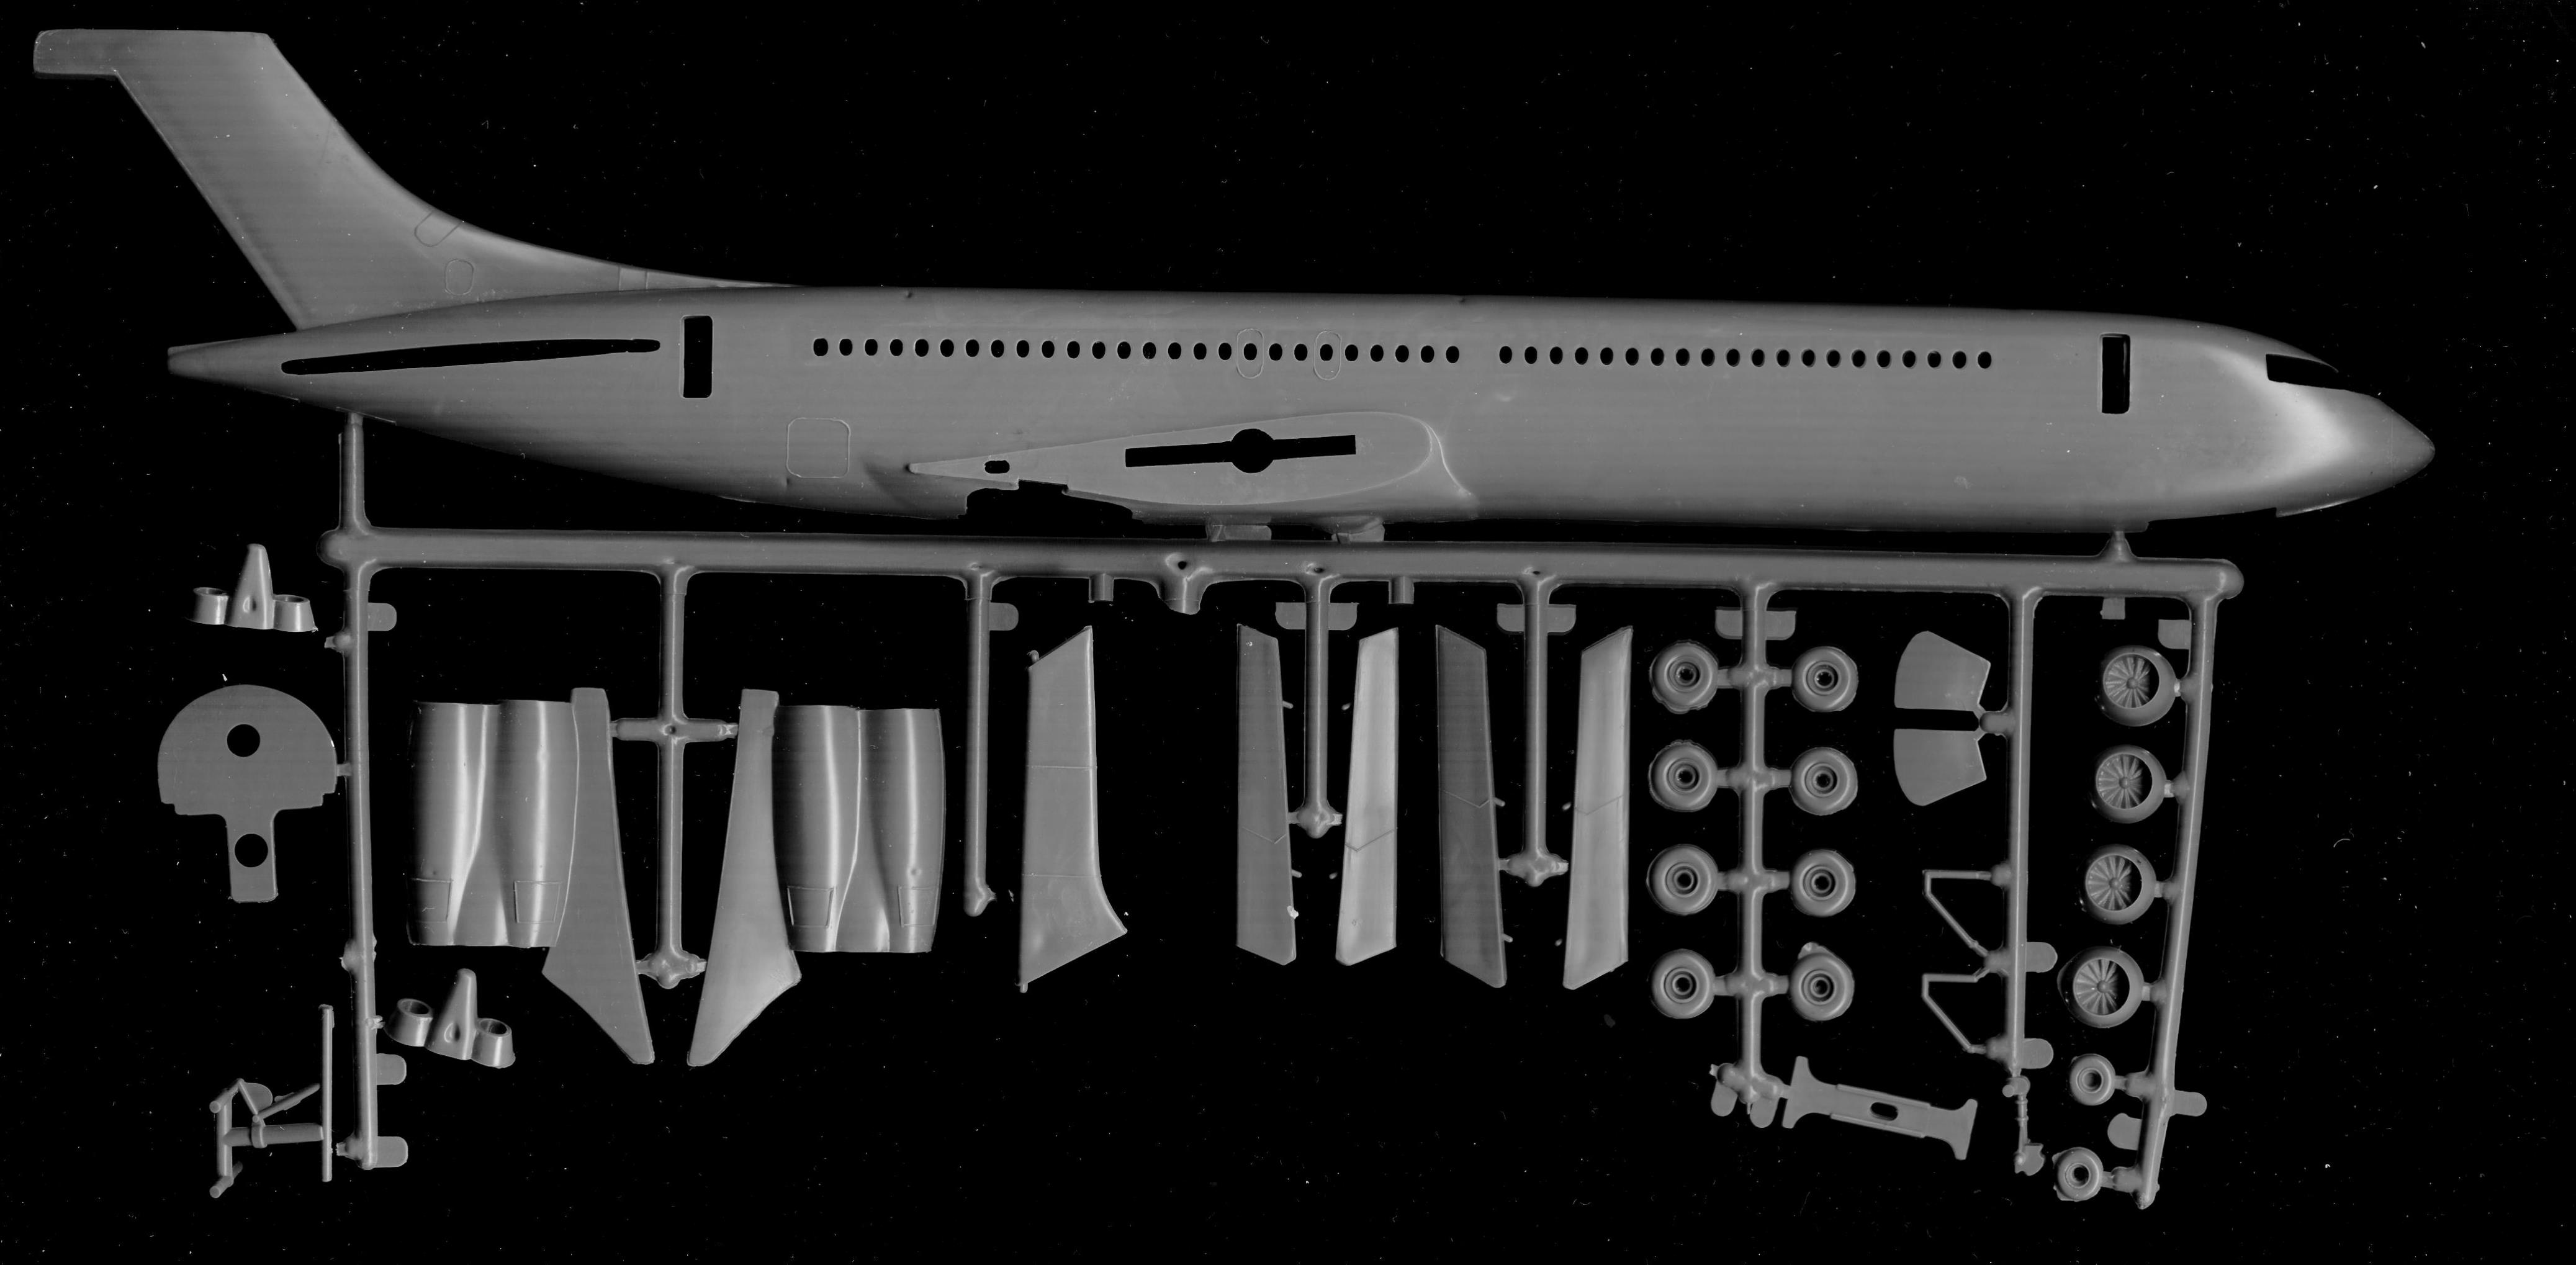 Литники с деталямя NOVO F140 Super VC10 - Jet Airliner, NOVO Toys Ltd, 1980